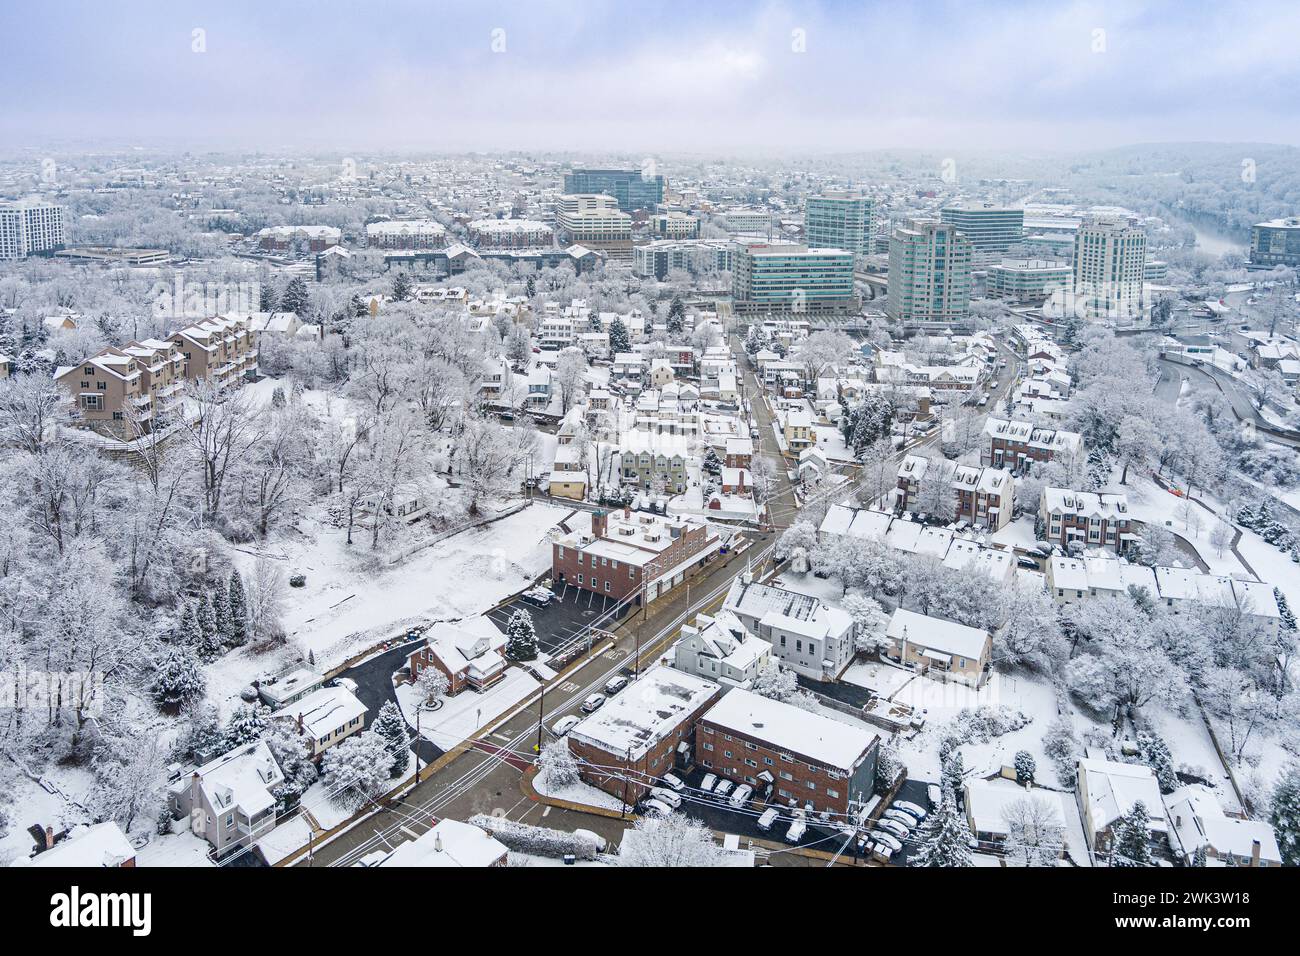 Vista aerea di Conshohocken Pennsylvania durante l'inverno con neve a terra. Foto Stock